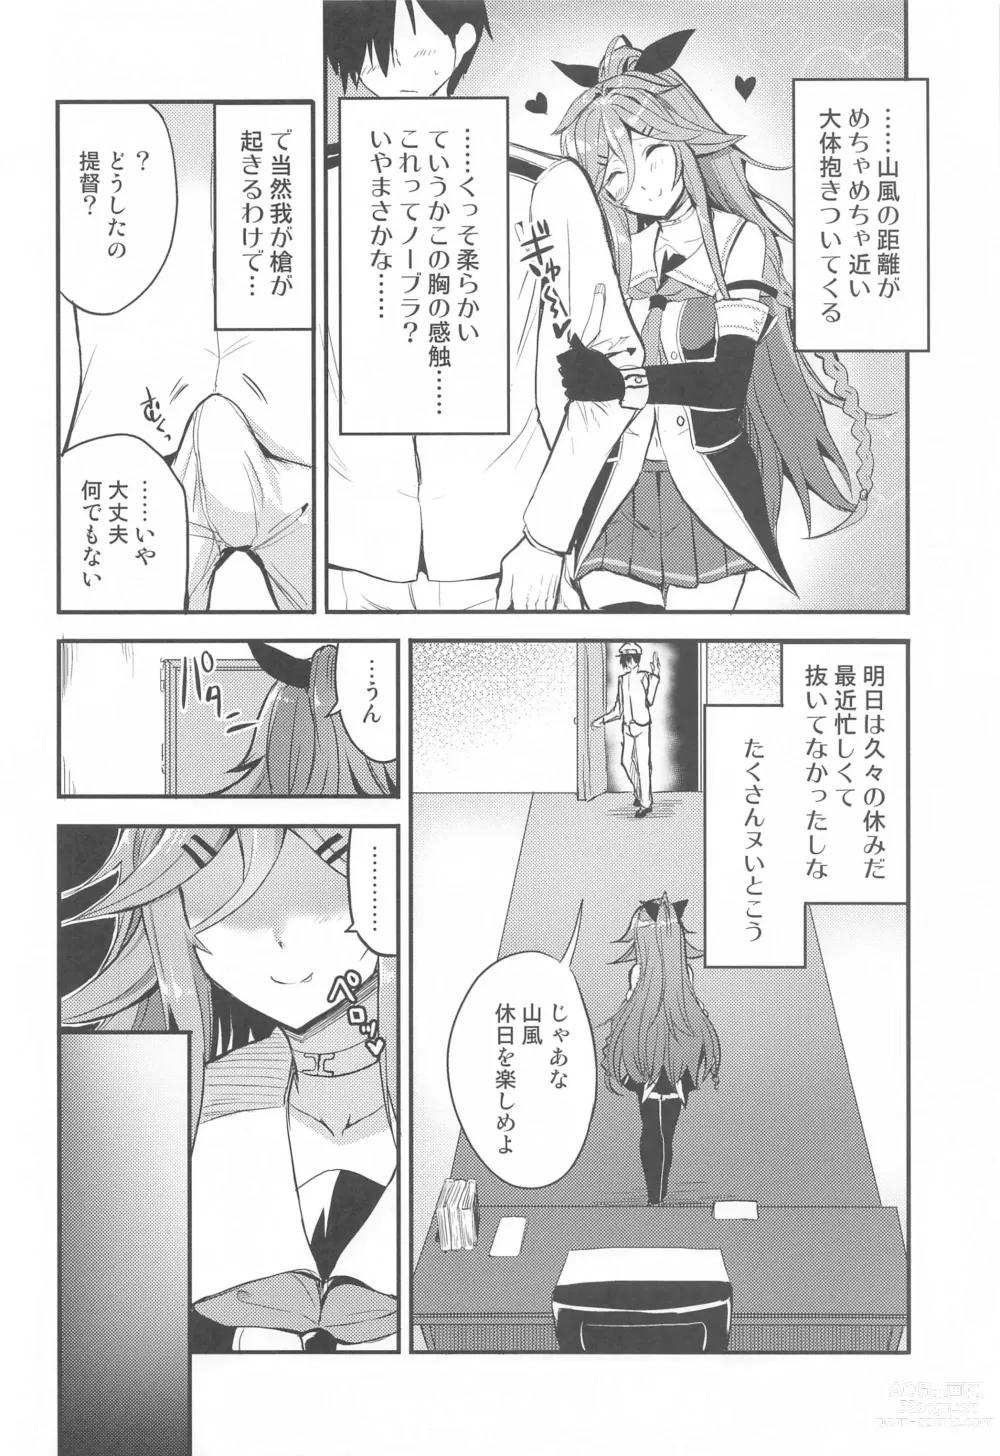 Page 5 of doujinshi Yamakaze to Nakayoku Naru made